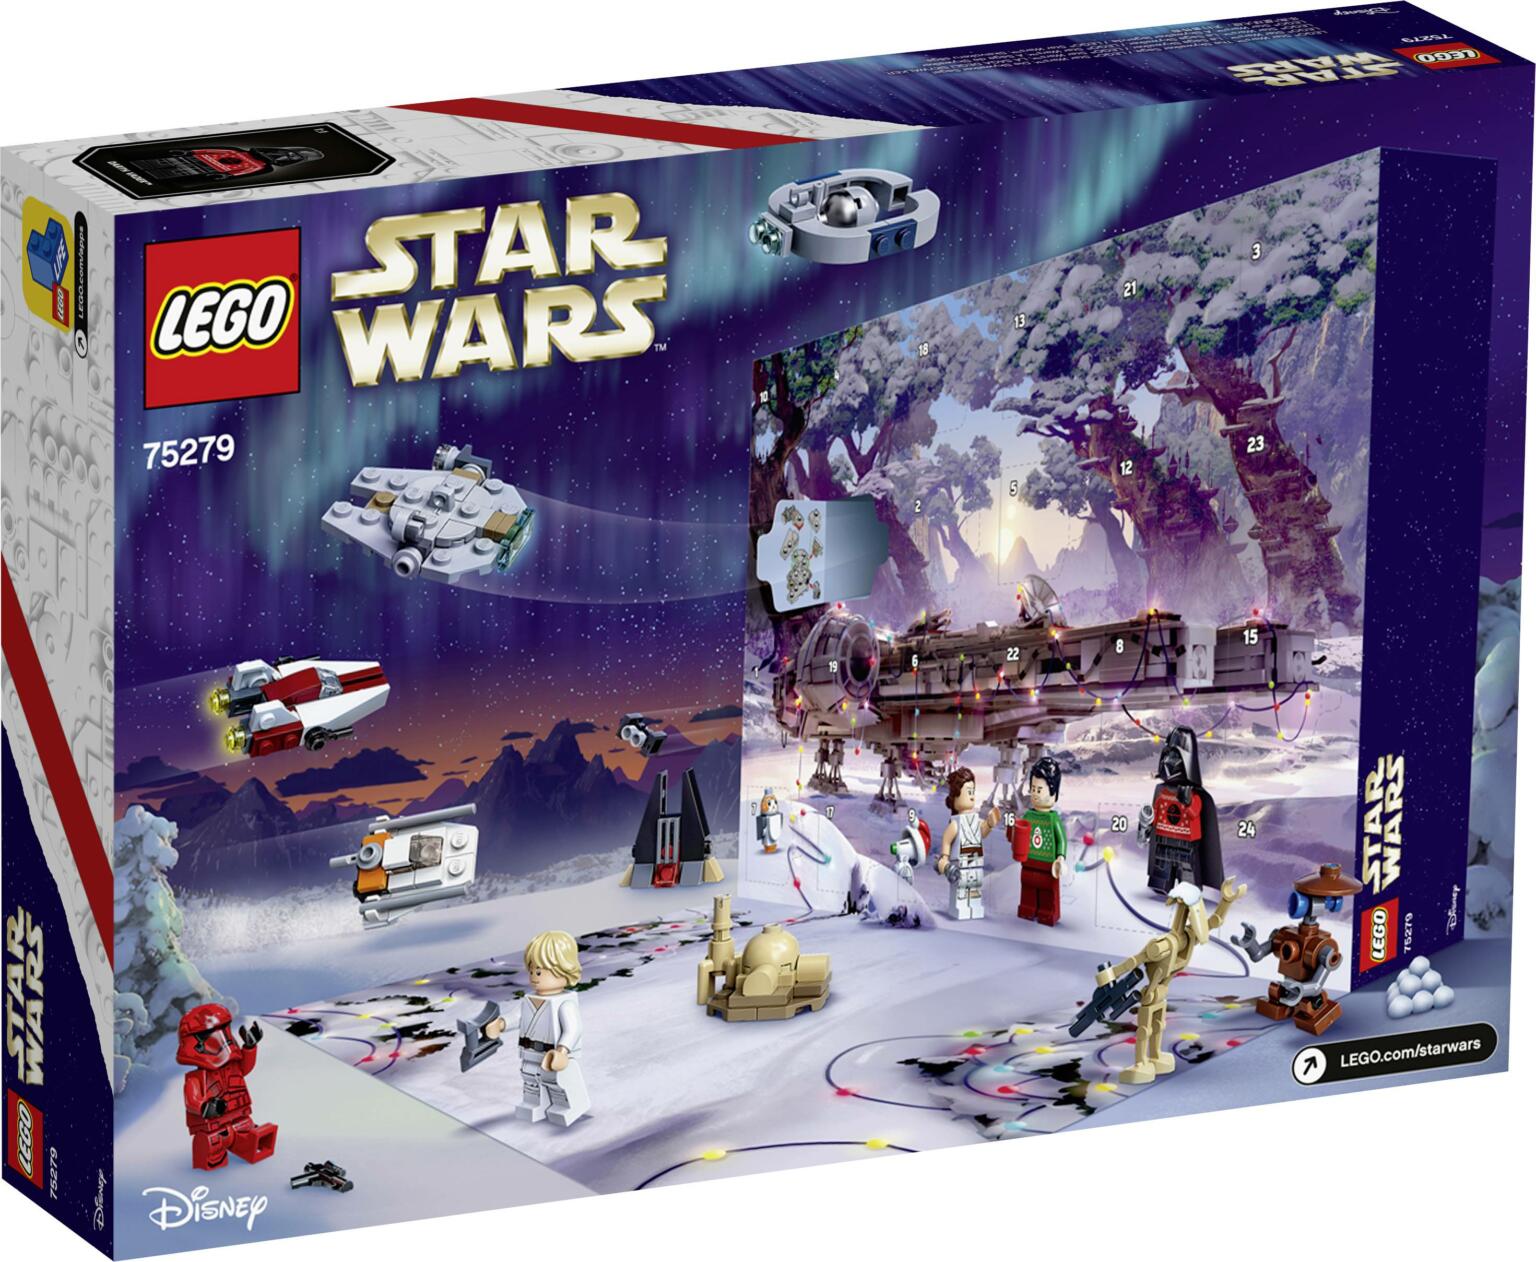 75279 LEGO® Star Wars™ Advent Calendar / Adventskalender (2020